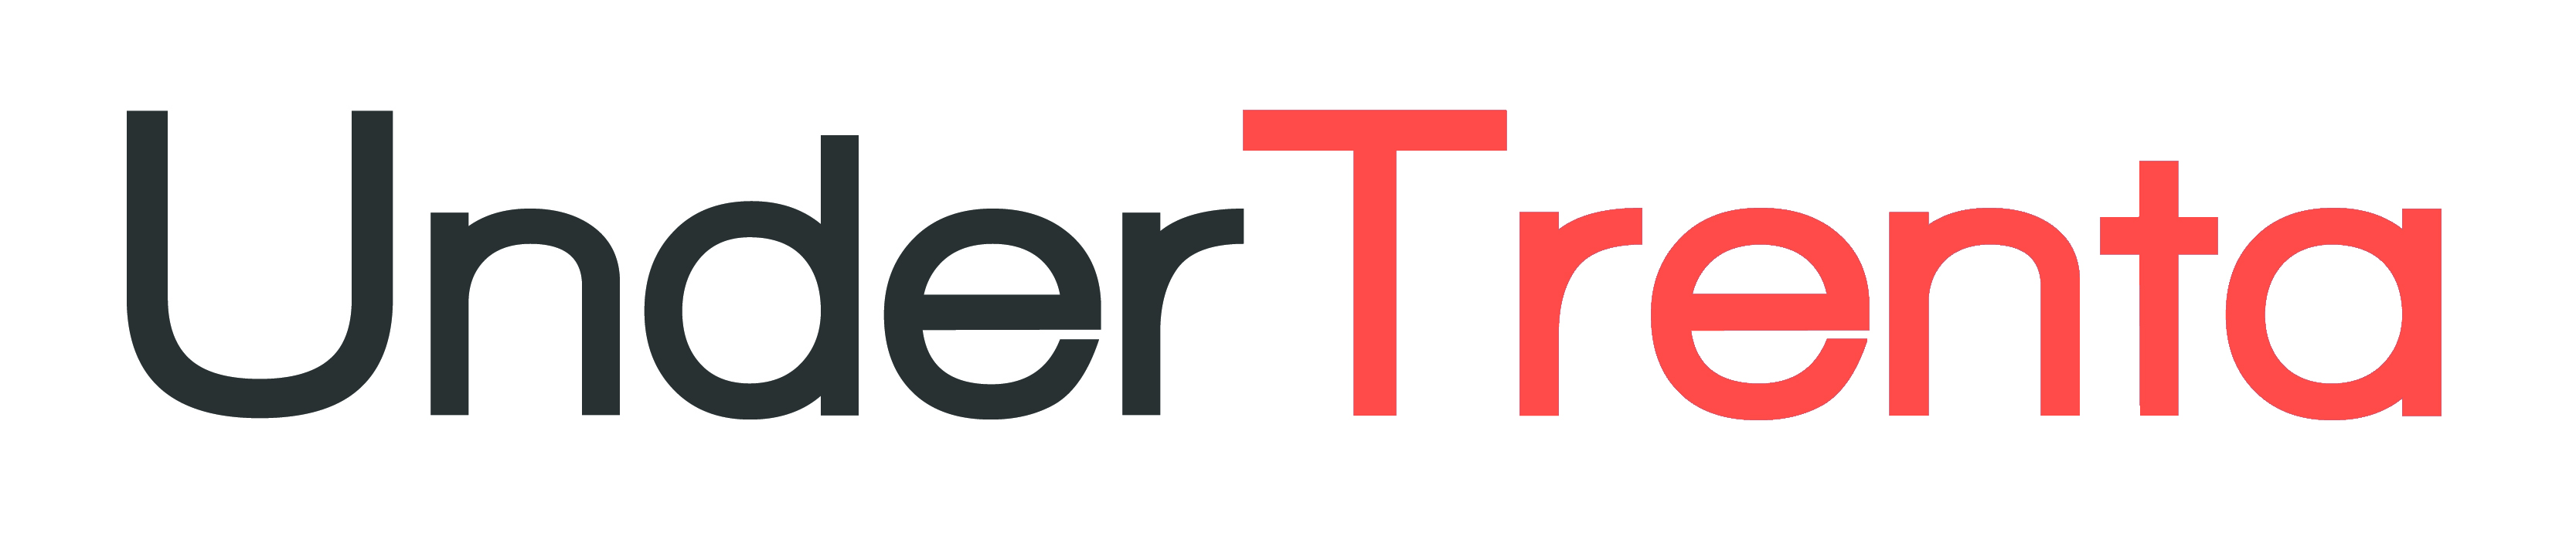 UnderTrenta Logo intero